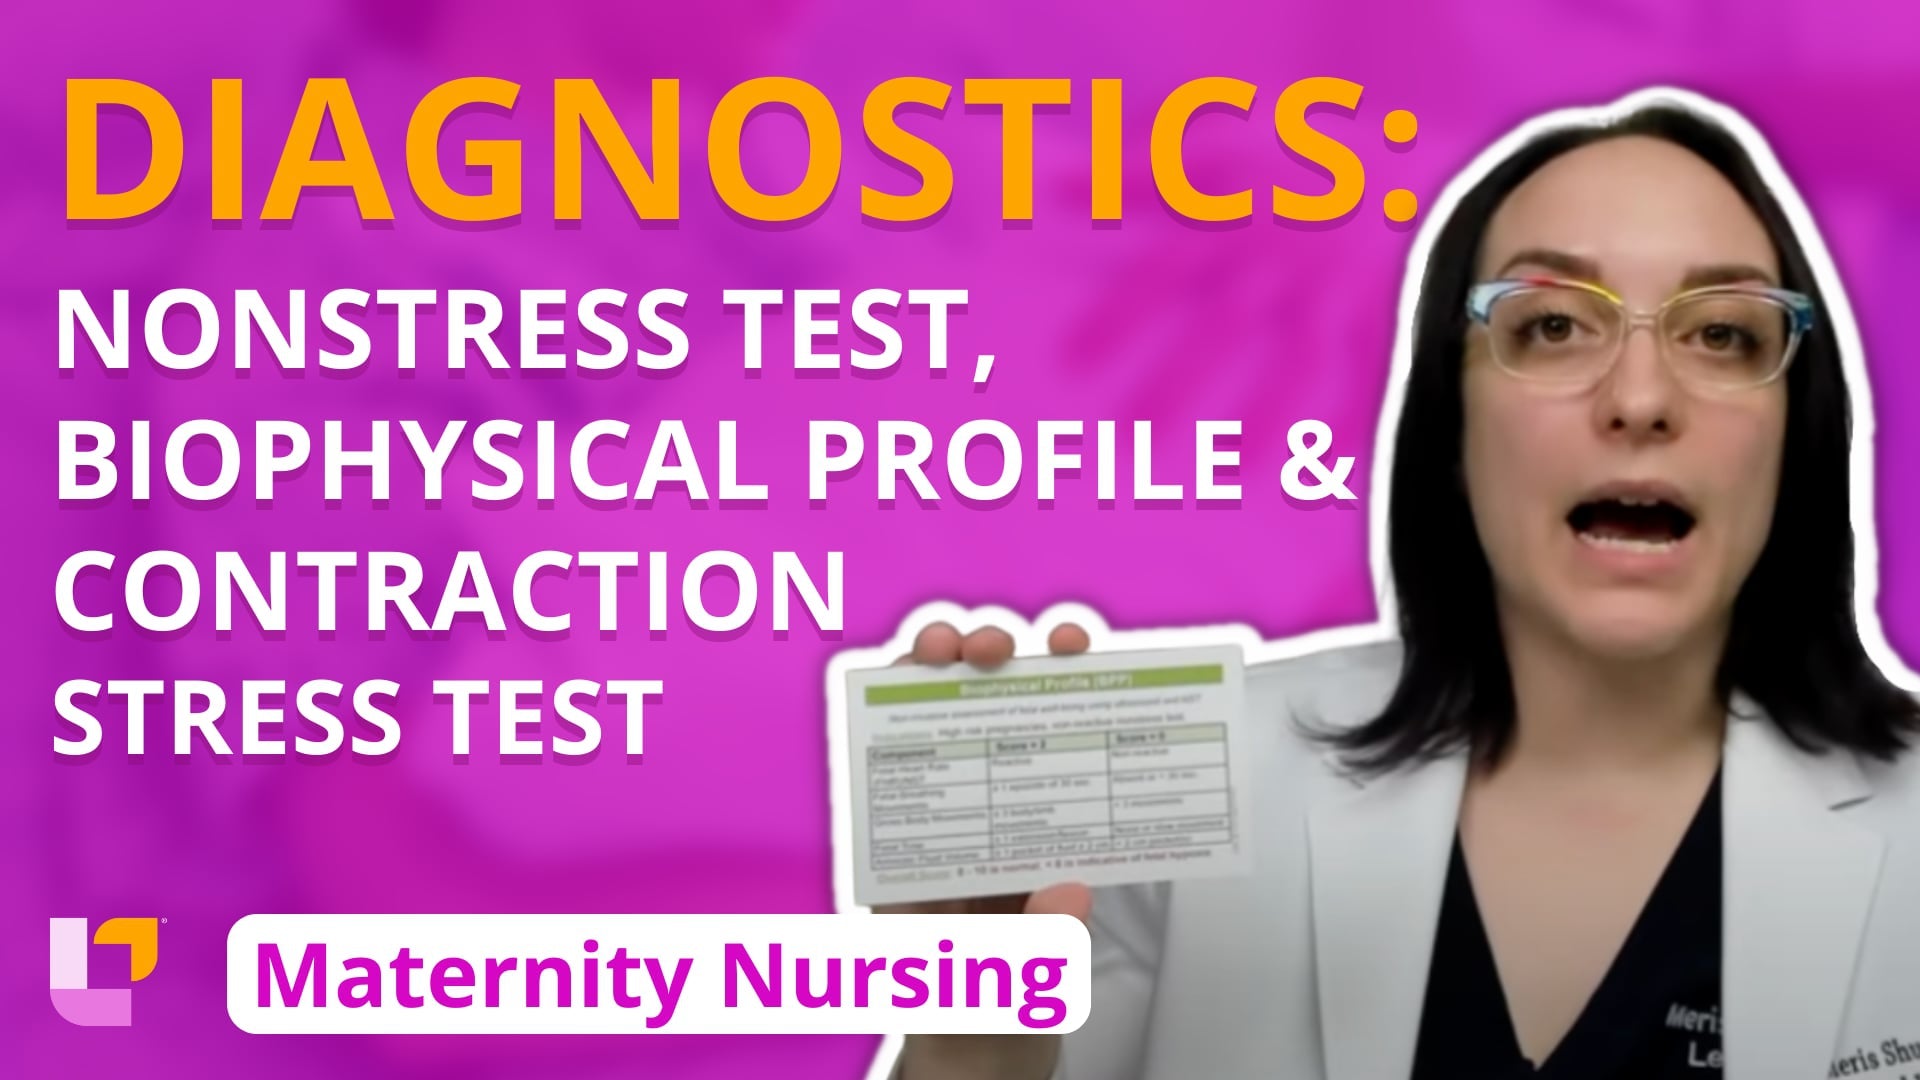 Maternity - Pregnancy, part 6: Diagnostics: Nonstress Test, Biophysical Profile, Contraction Stress Test - LevelUpRN